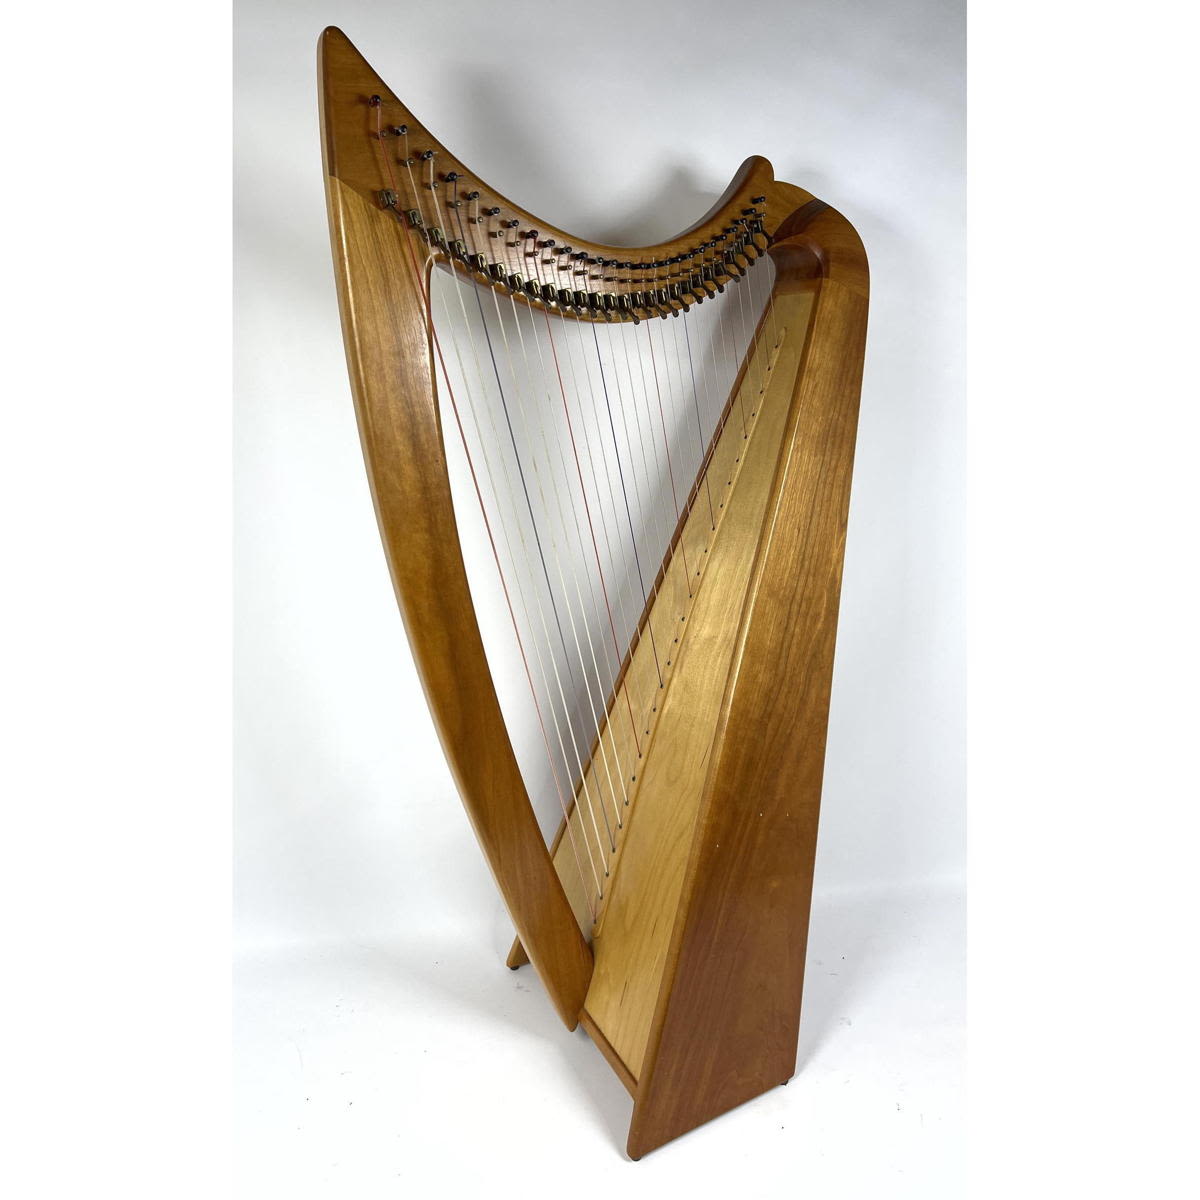 HALCYON Harp Musical Instrument. Elegant